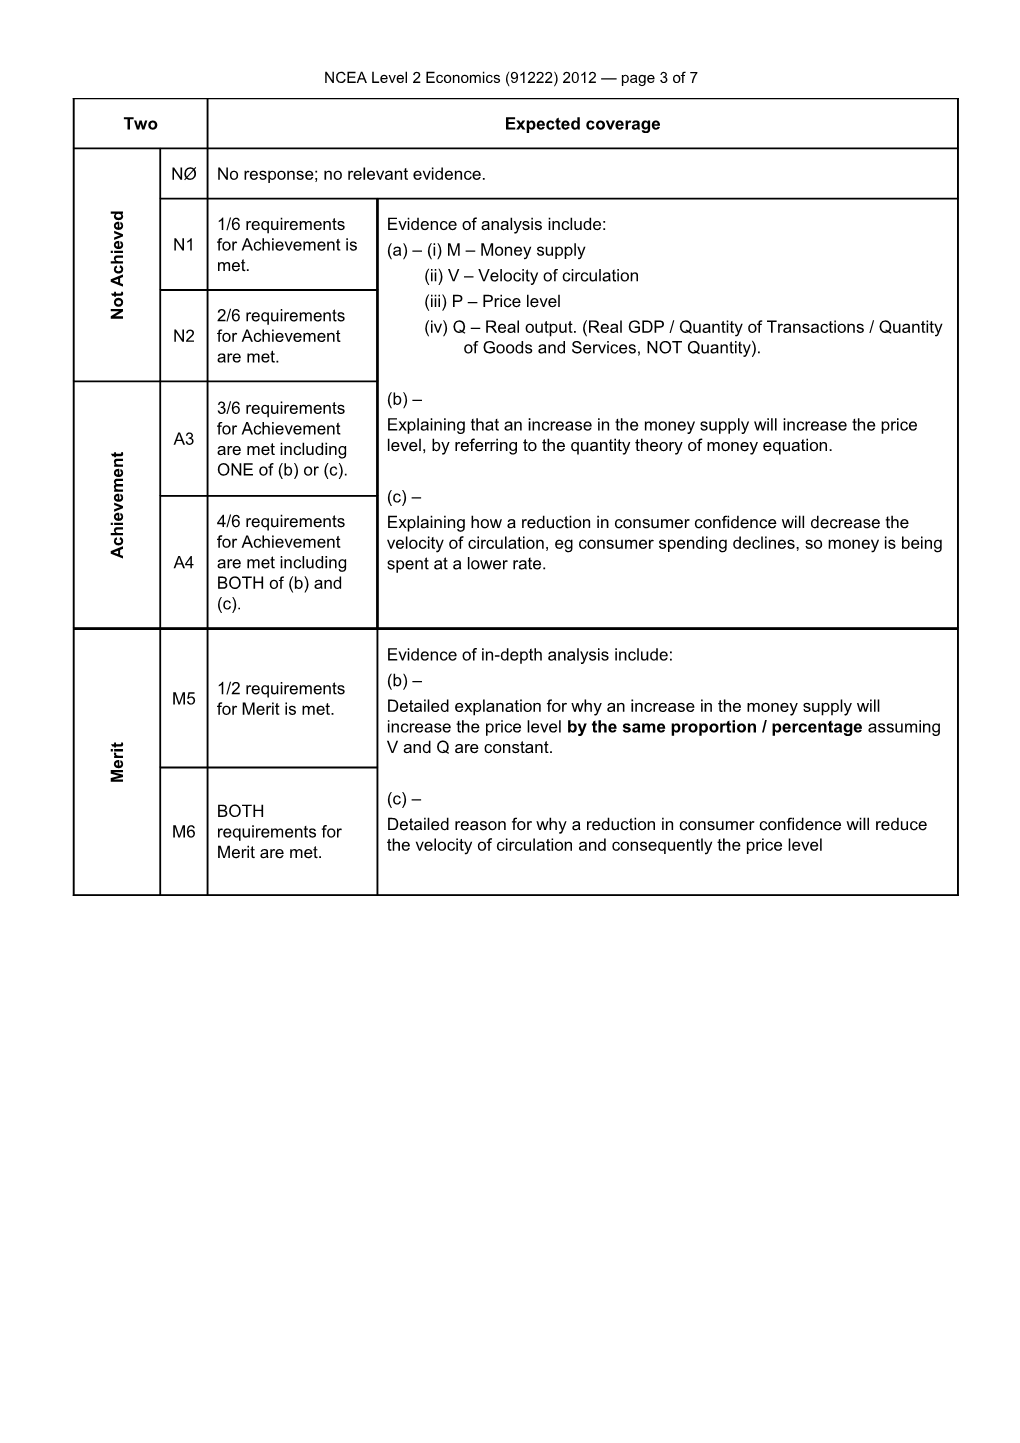 NCEA Level 2 Economics (91222) 2012 Assessment Schedule